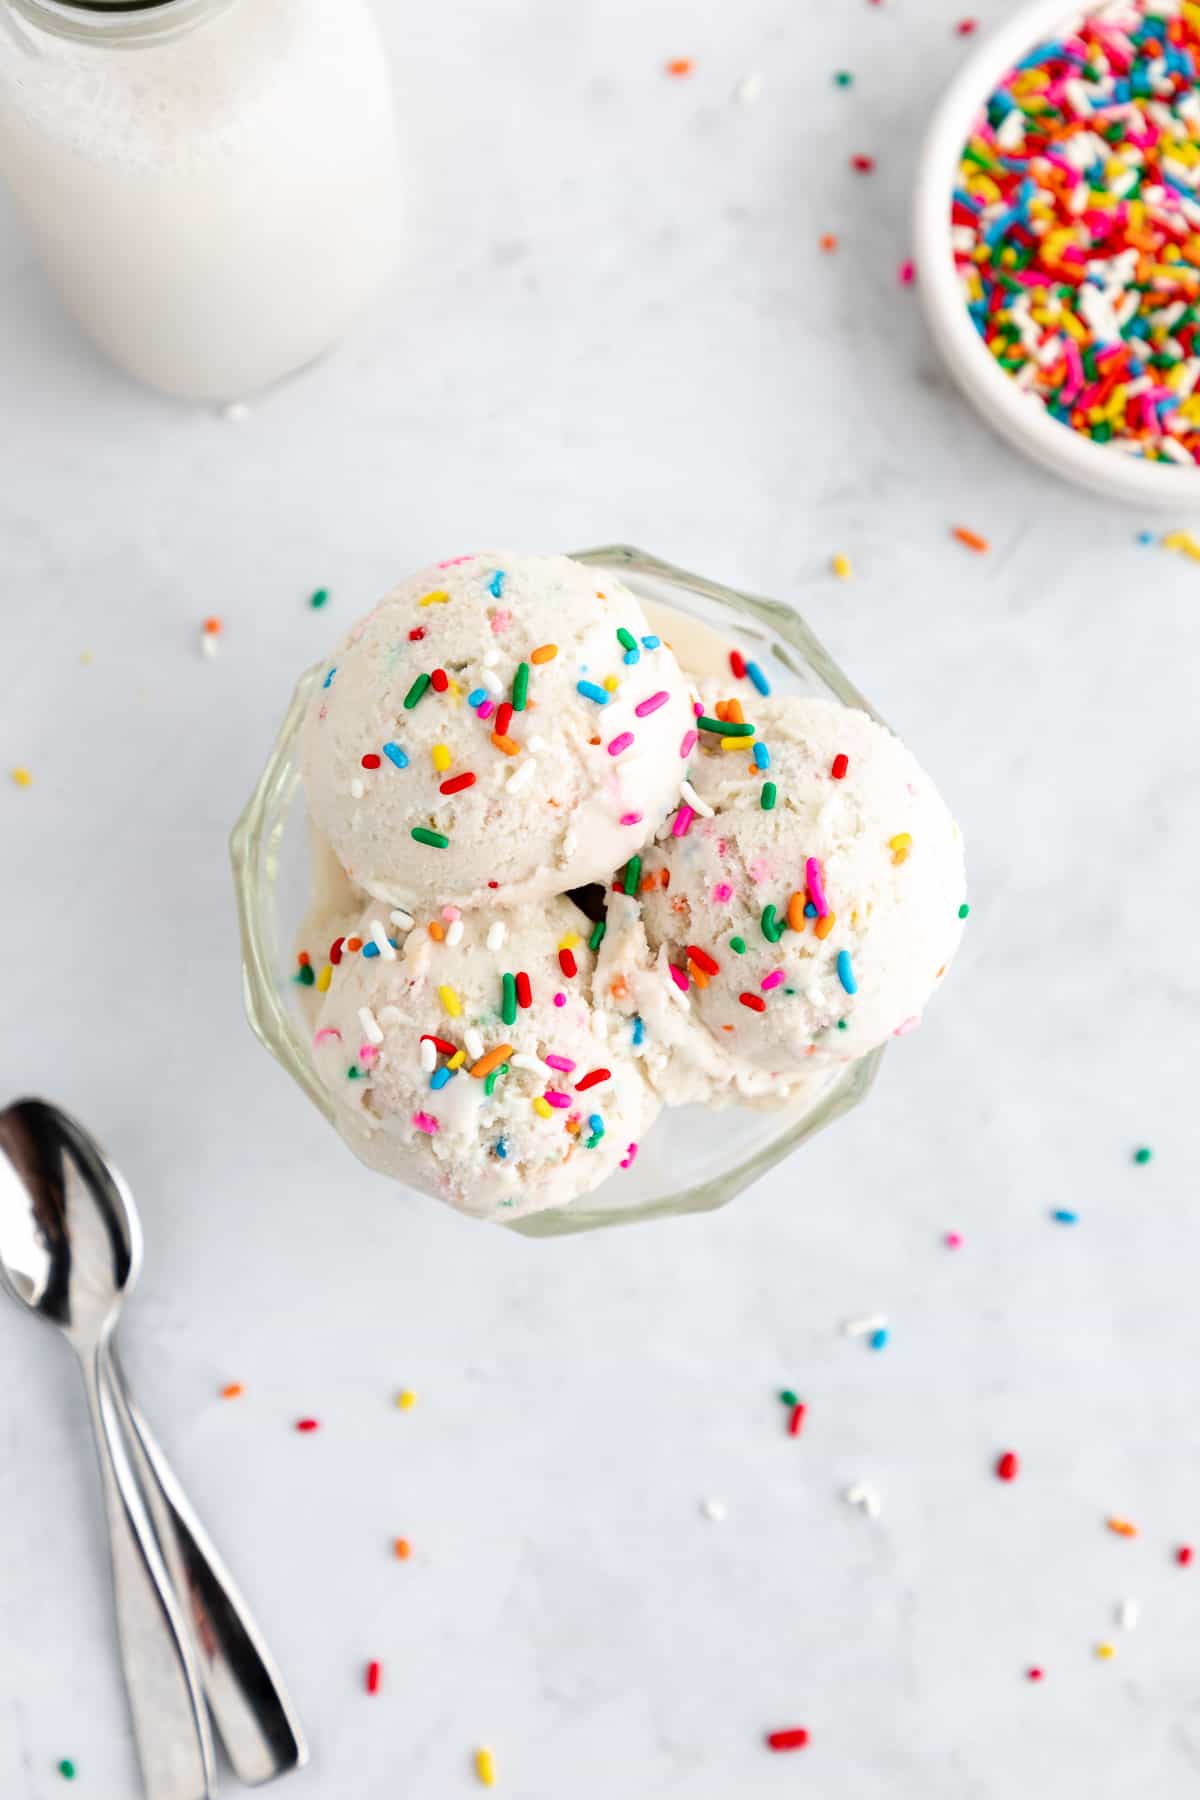 scoops of vegan cake batter ice cream inside a sundae glass with rainbow sprinkles